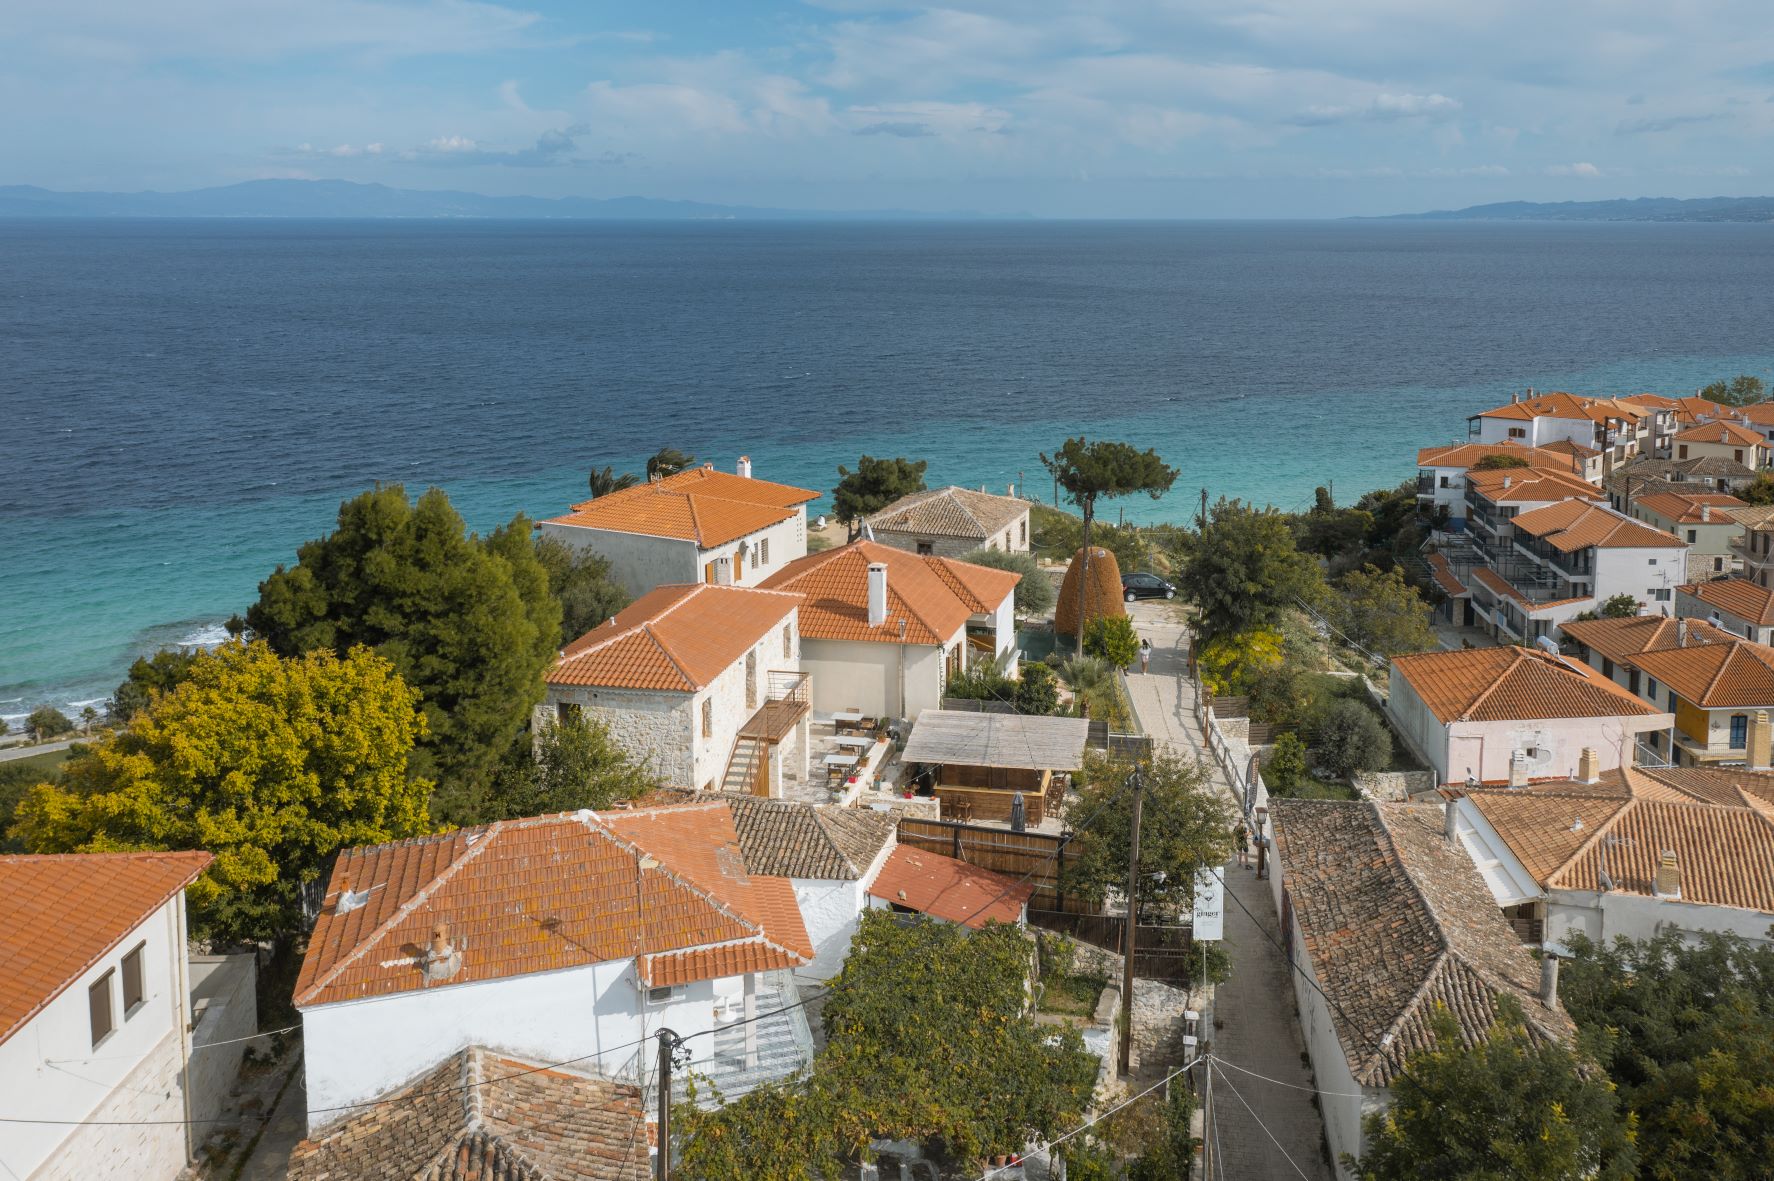 Panoramic view of Athitos (or Afitos) village